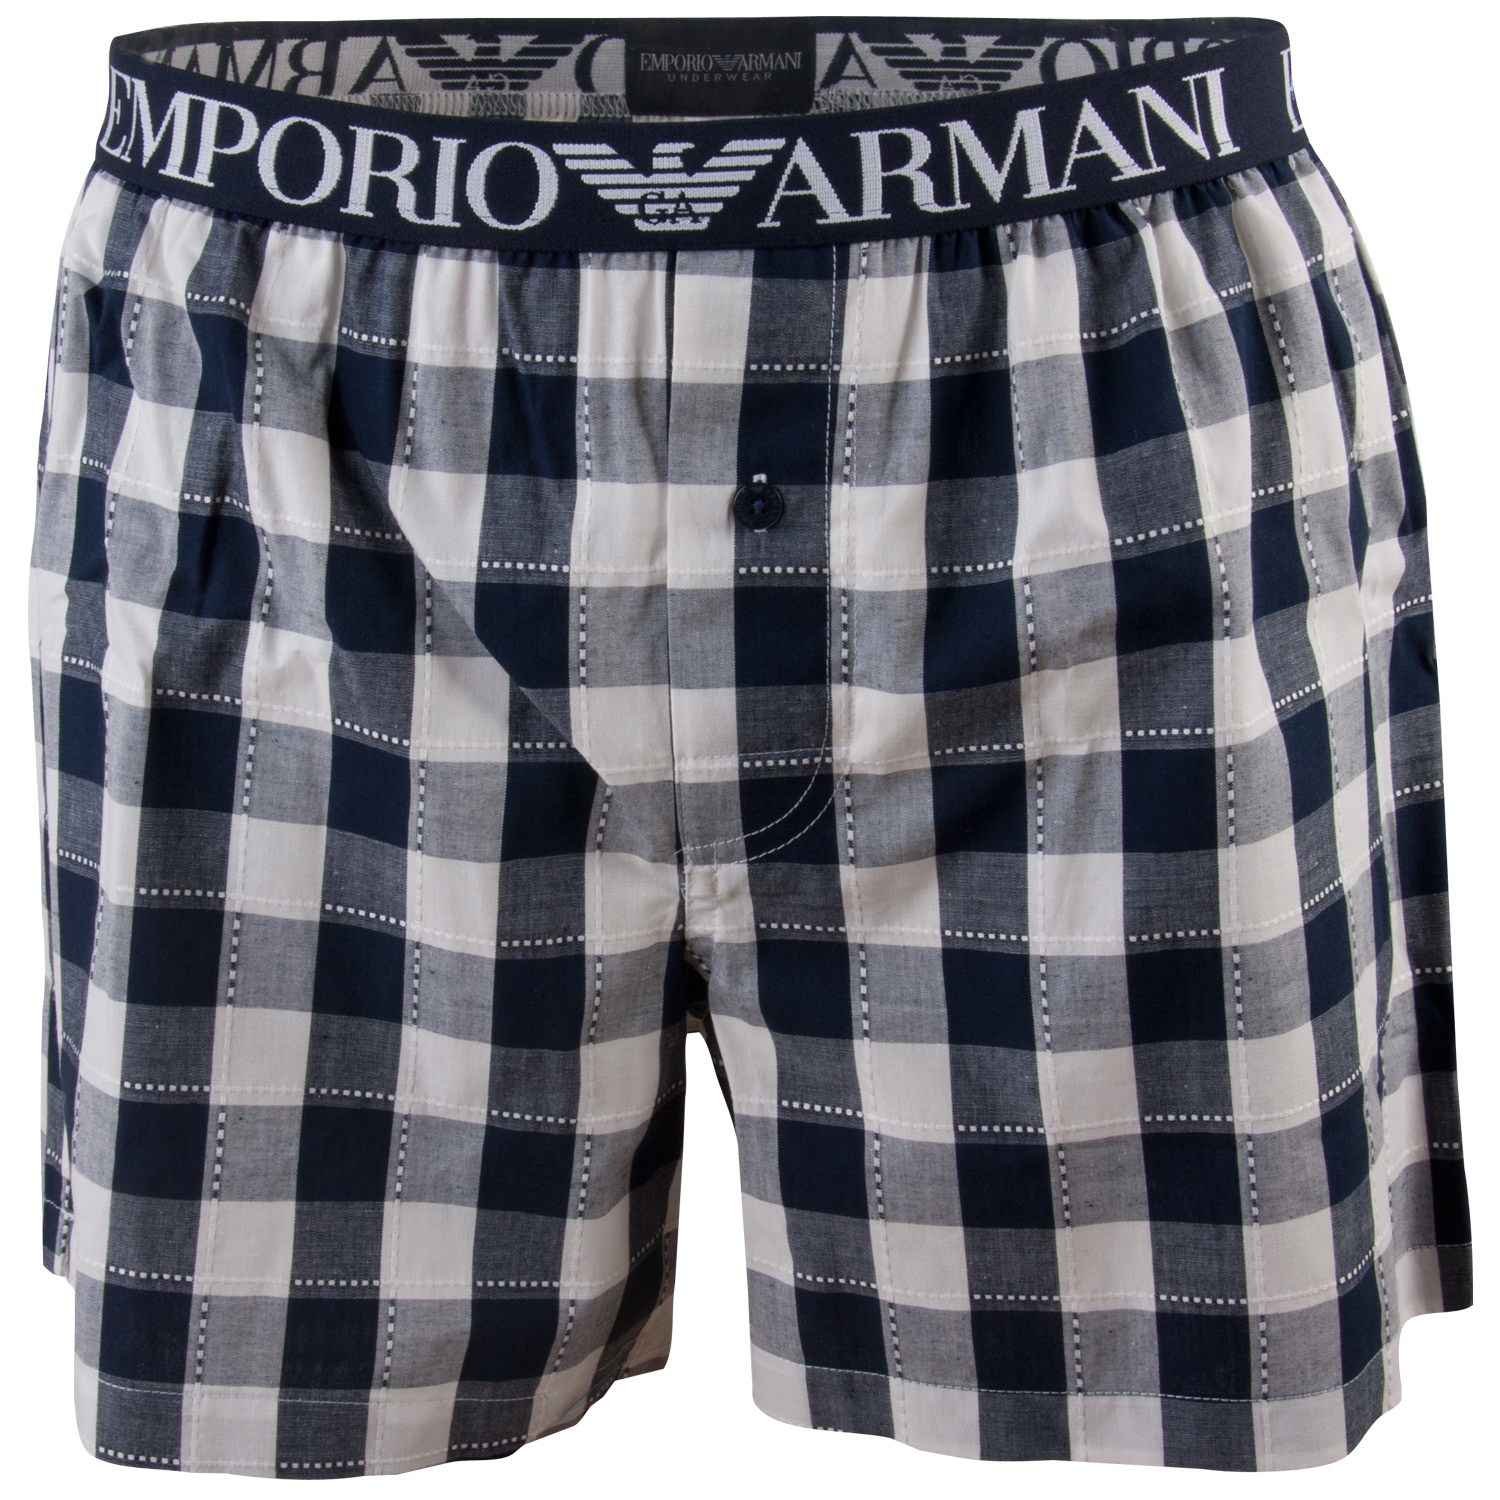 armani boxer shorts